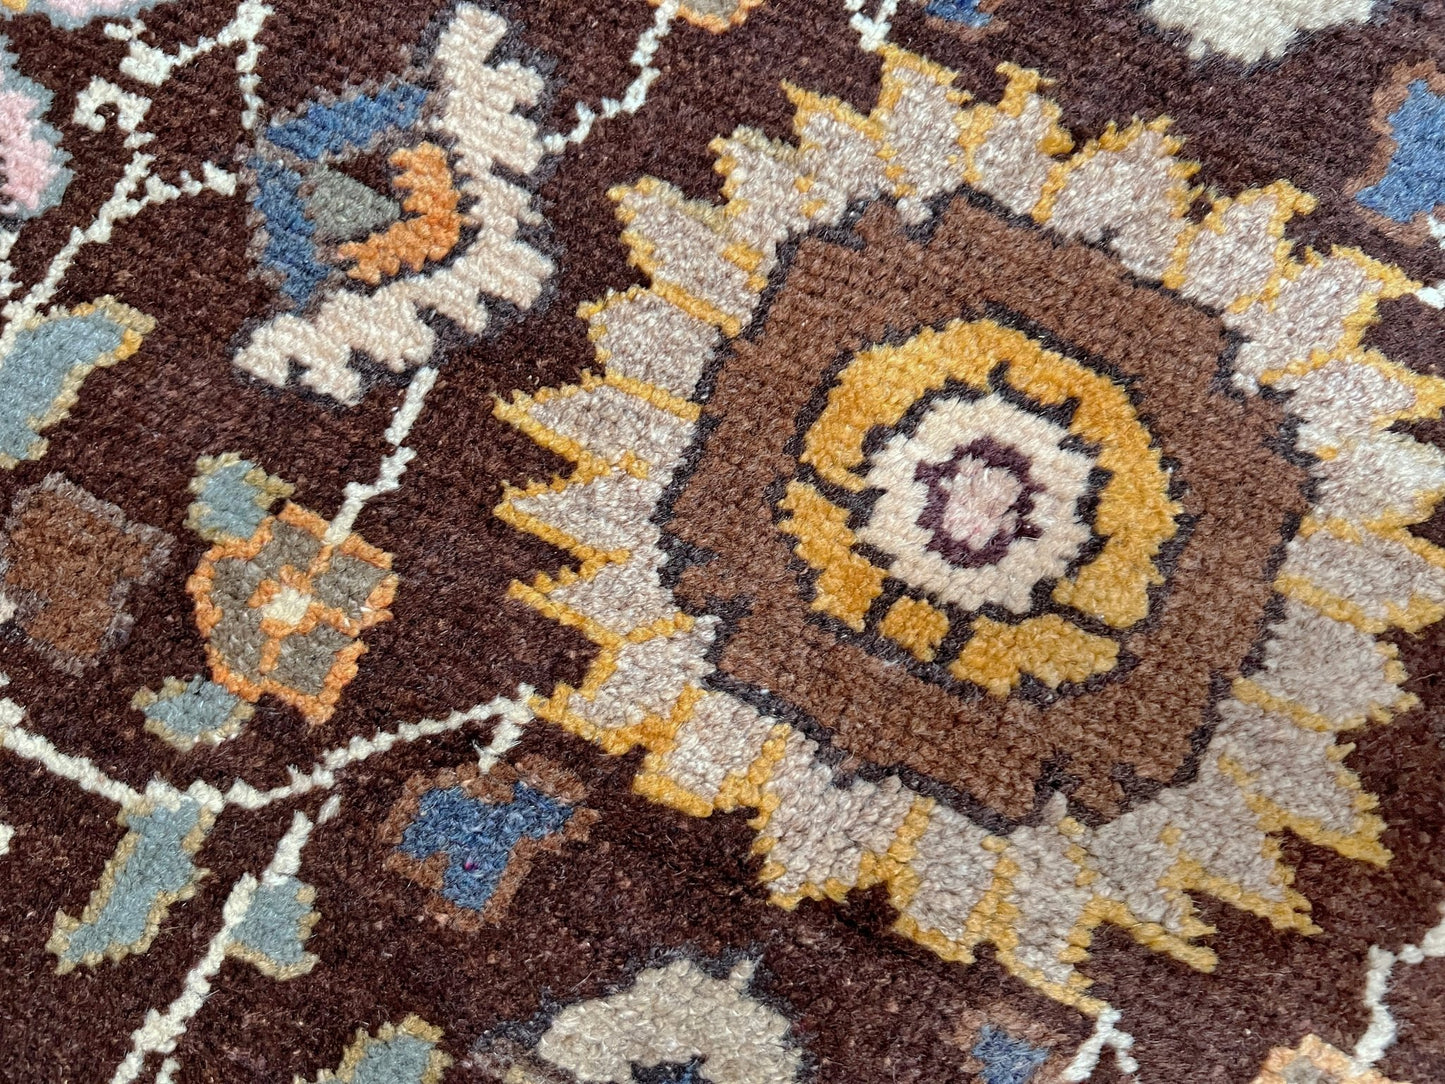 Kayseri Vintage turkish rug shop San francisco bay area. Carpet store Buy handmade 4x6 wool rug online free shipping.